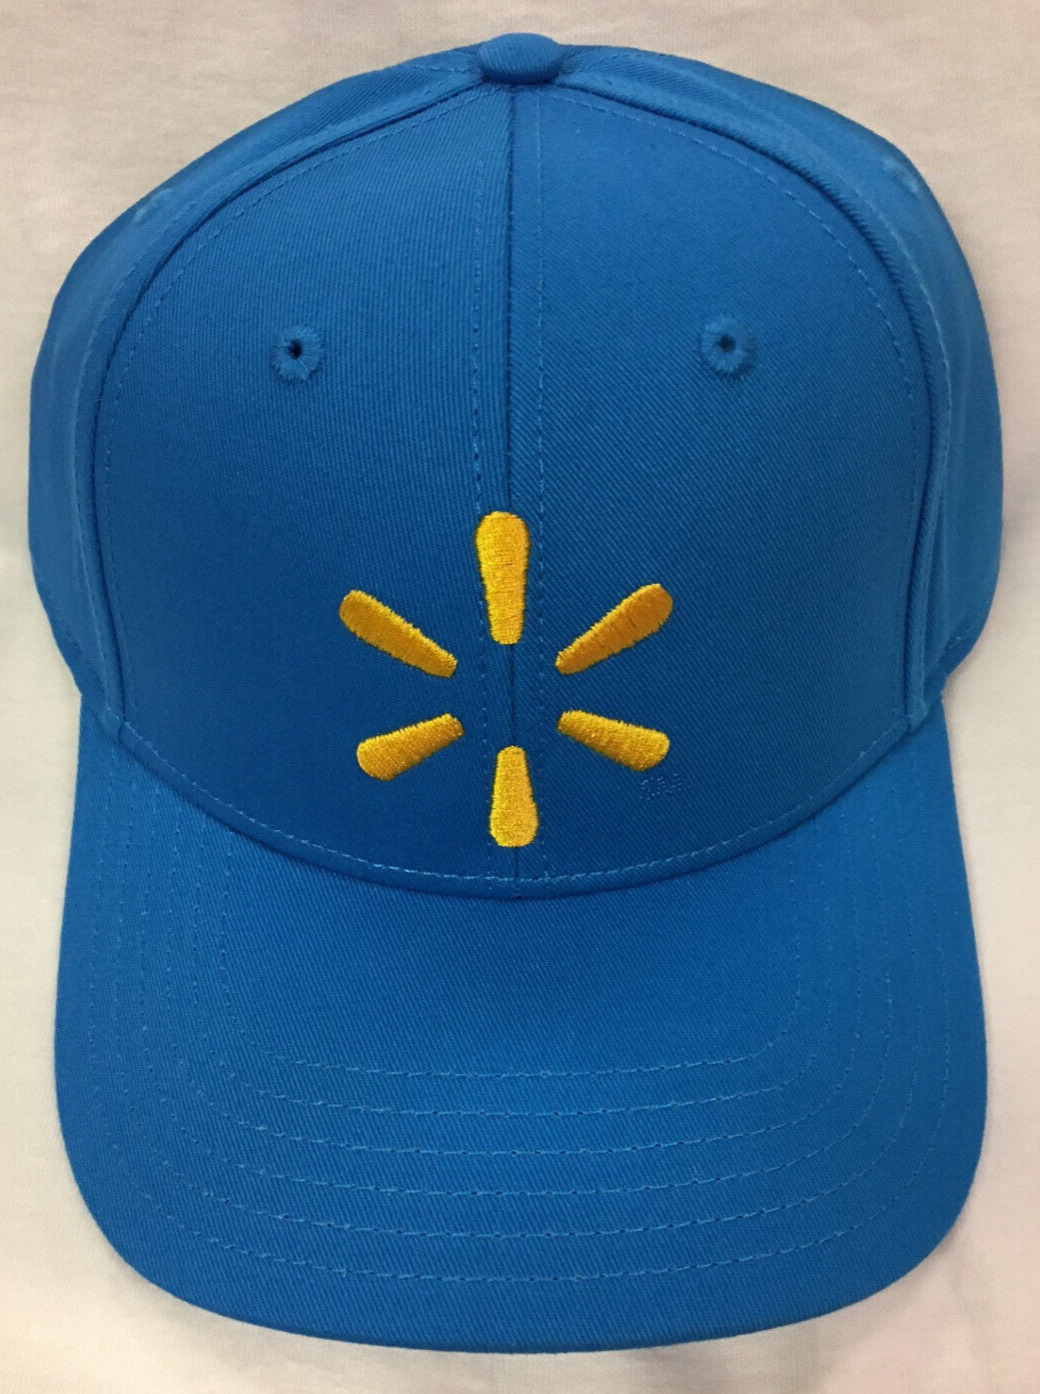 Walmart Associate Spark Royal Blue Embroidered Cotton Cap Adjustable BRAND NEW